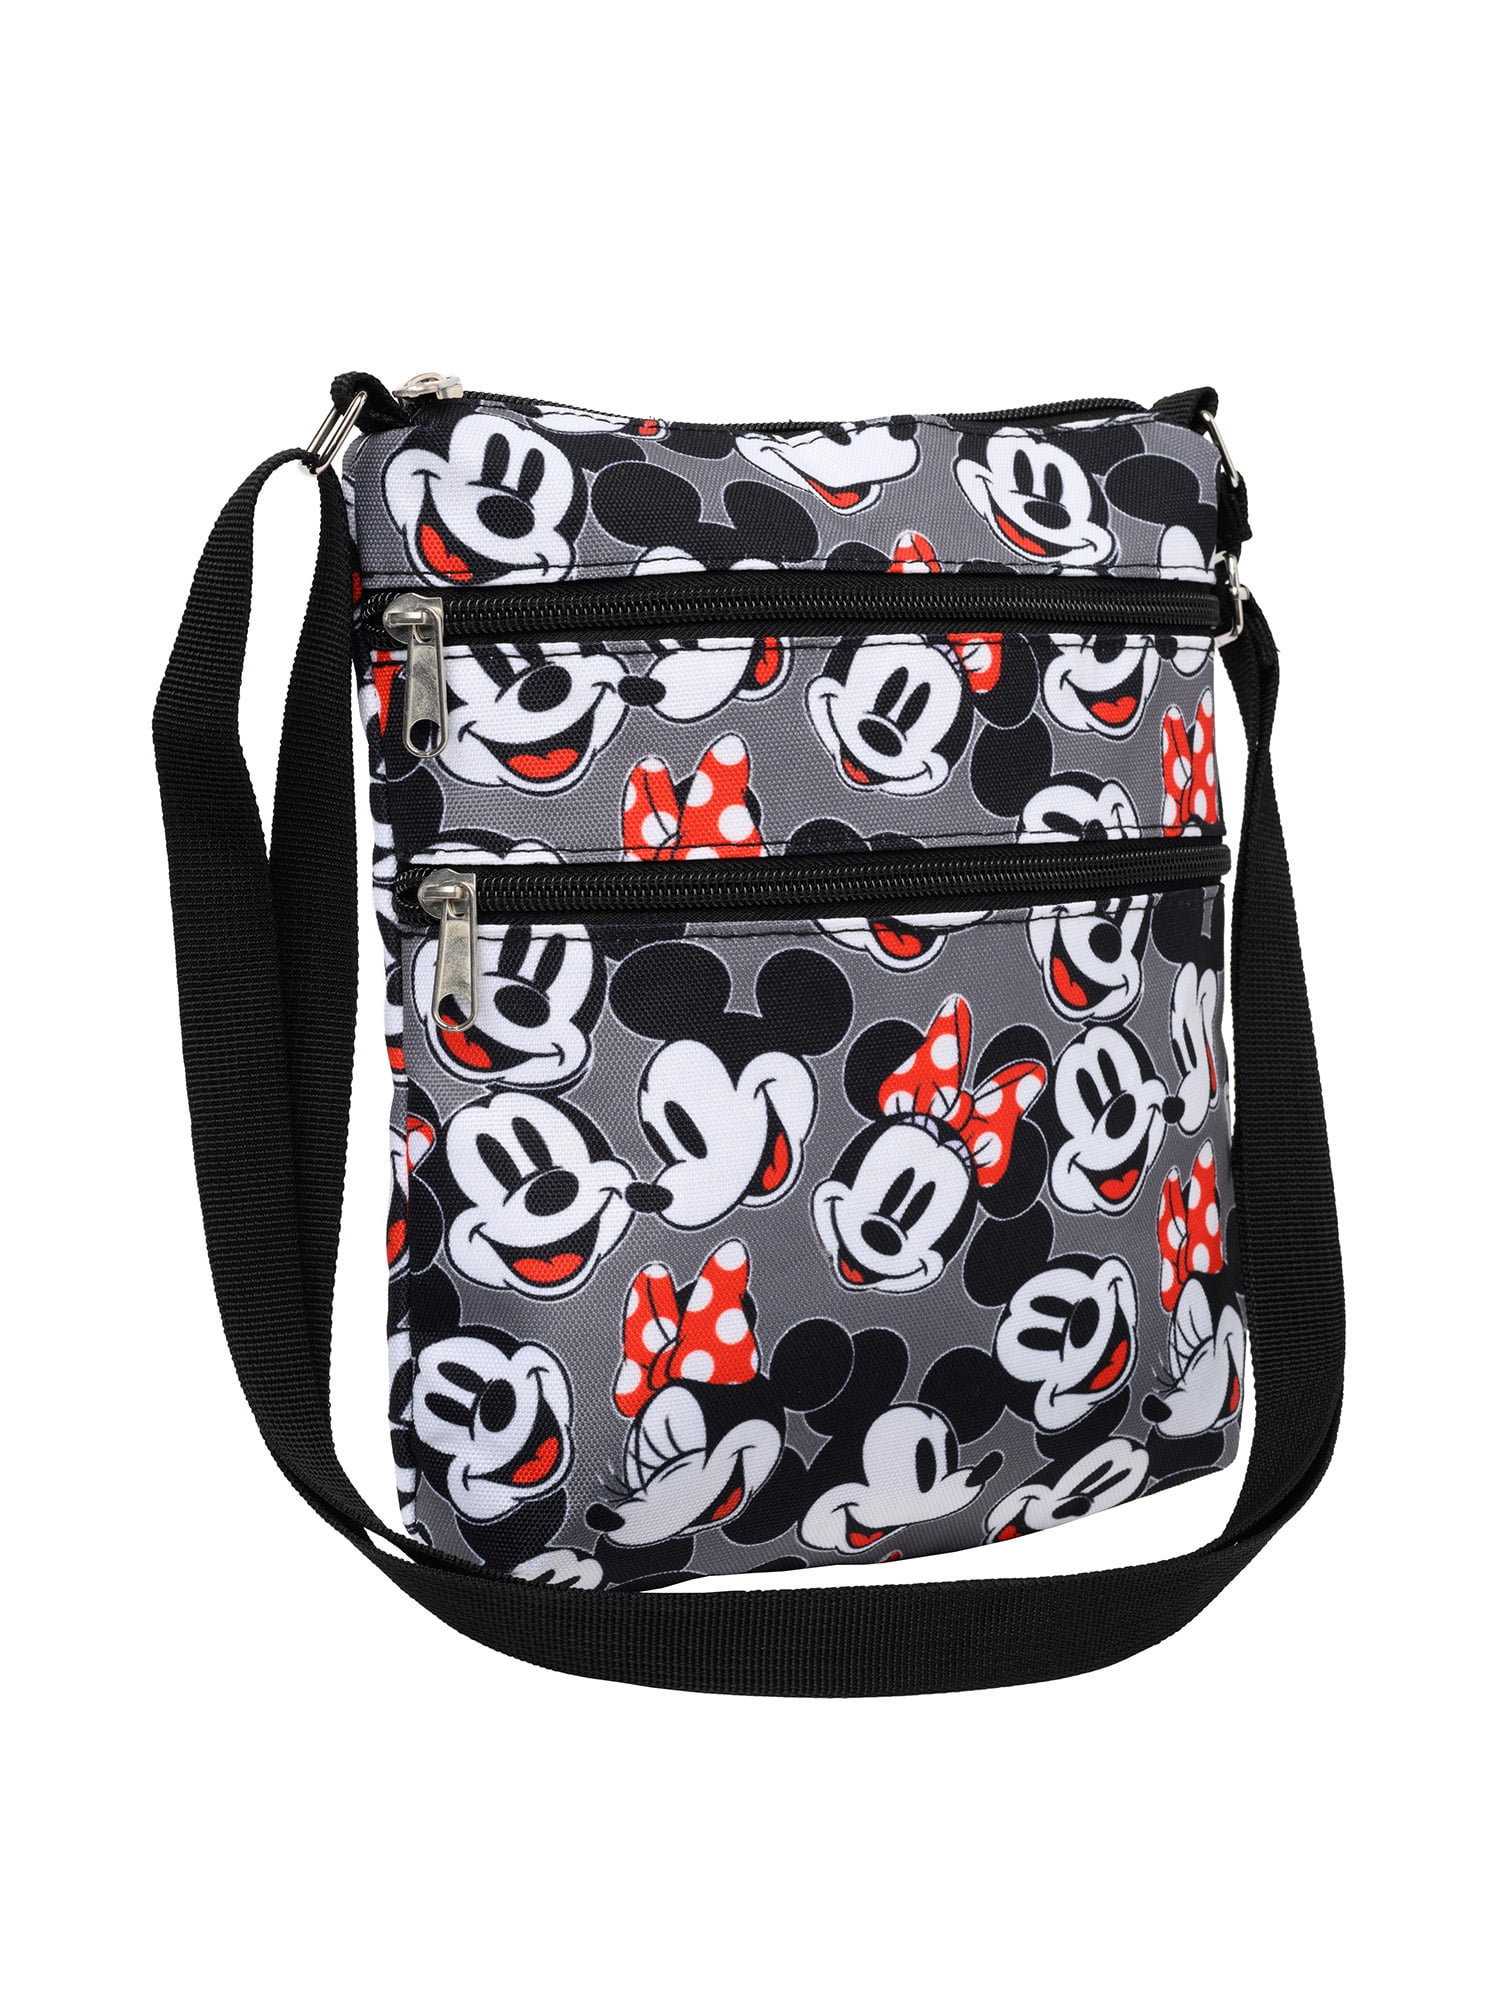 Minnie Mouse Medium Disney Shoulder Bags (1968-Now) for sale | eBay